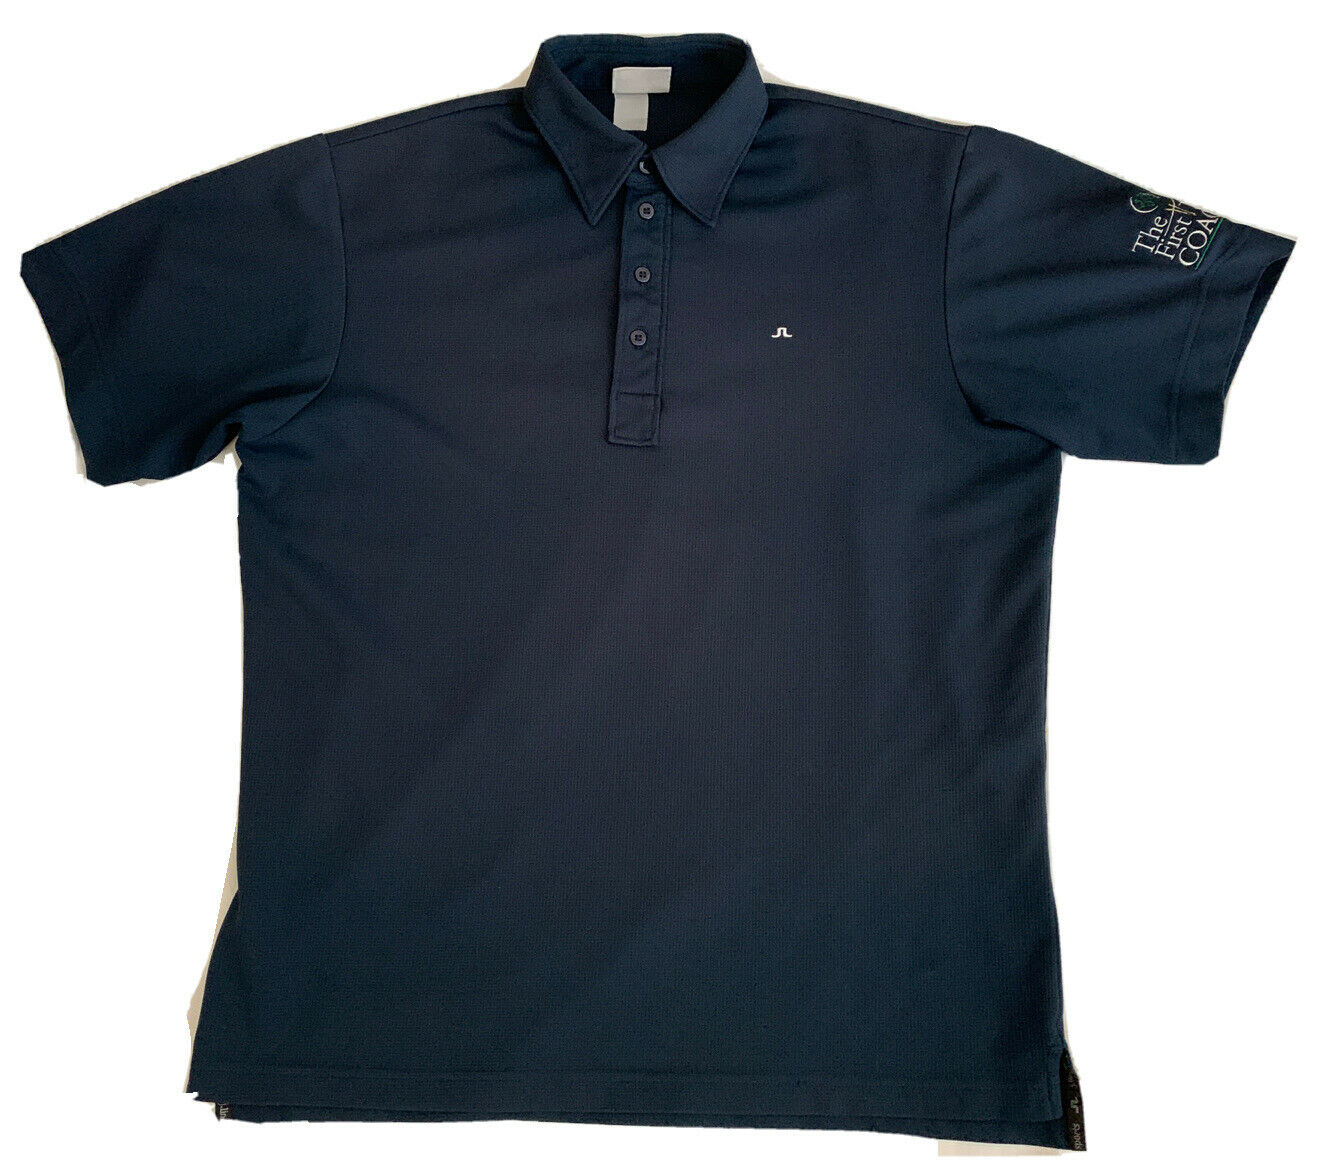 Men’s J.lindeberg 100% Polyester Navy Blue Polo Golf Shirt - Size L